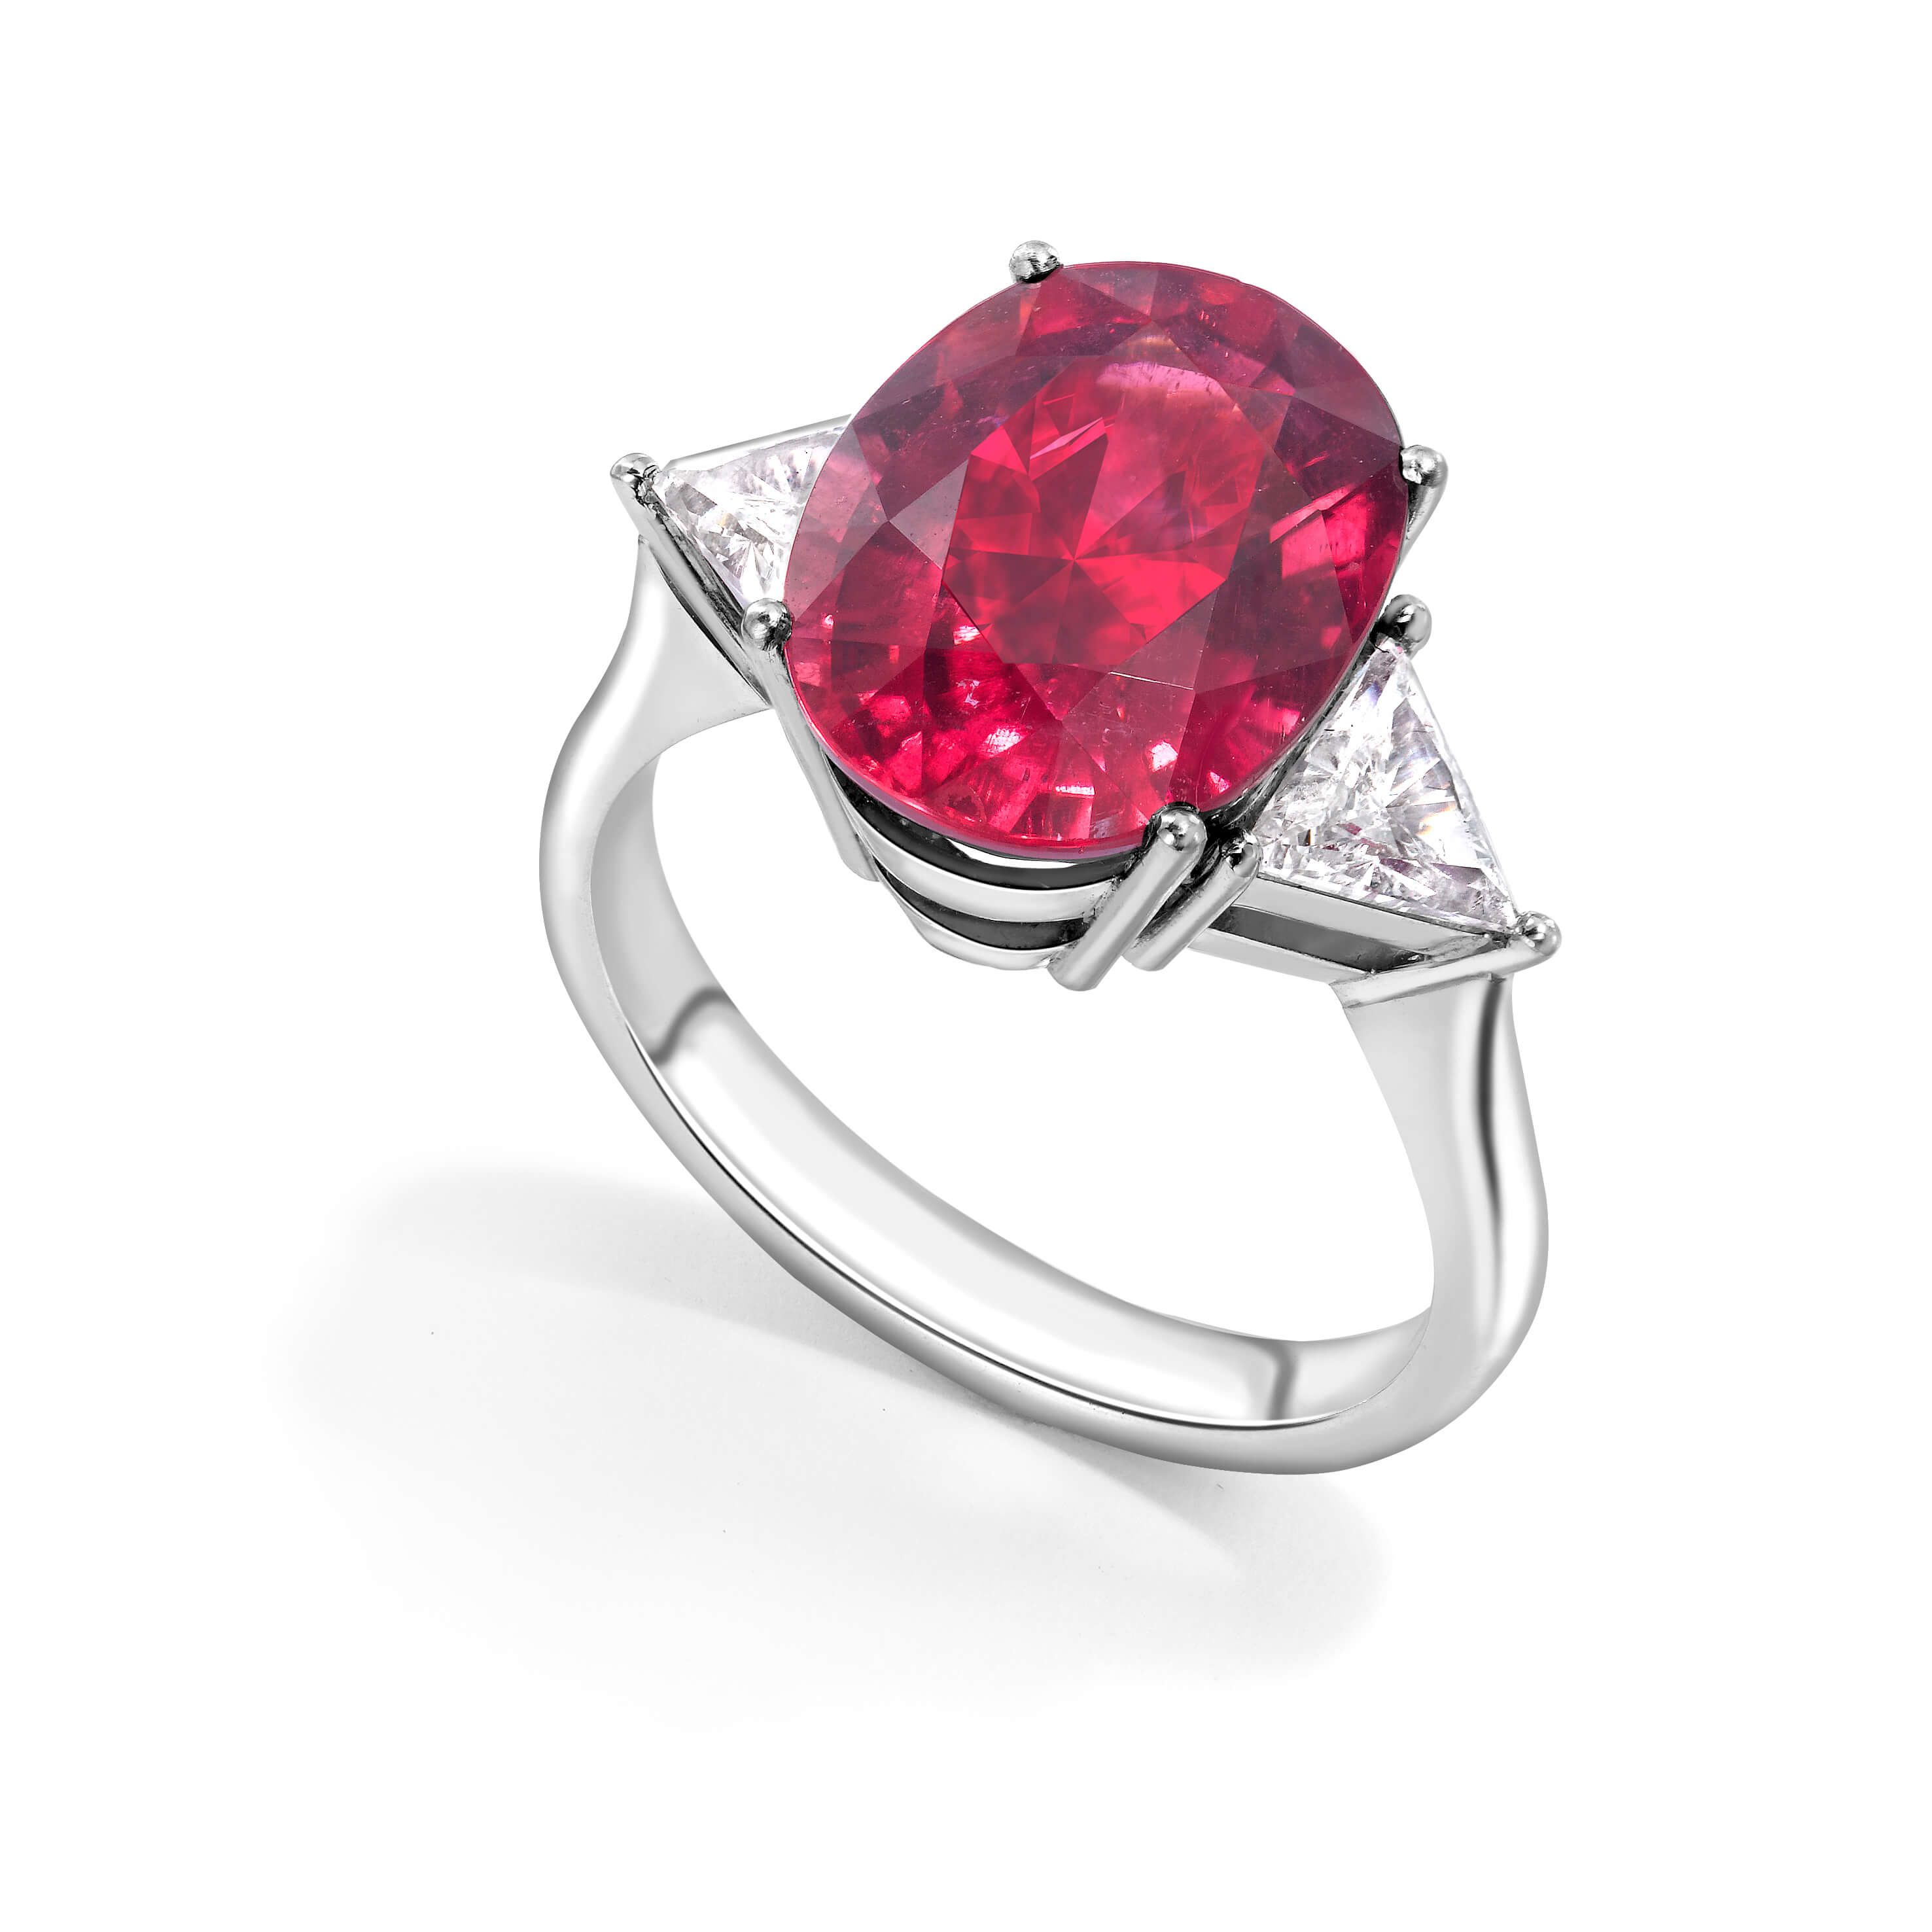 Rubellite and diamond 3 stone ring - The Diamond Trust